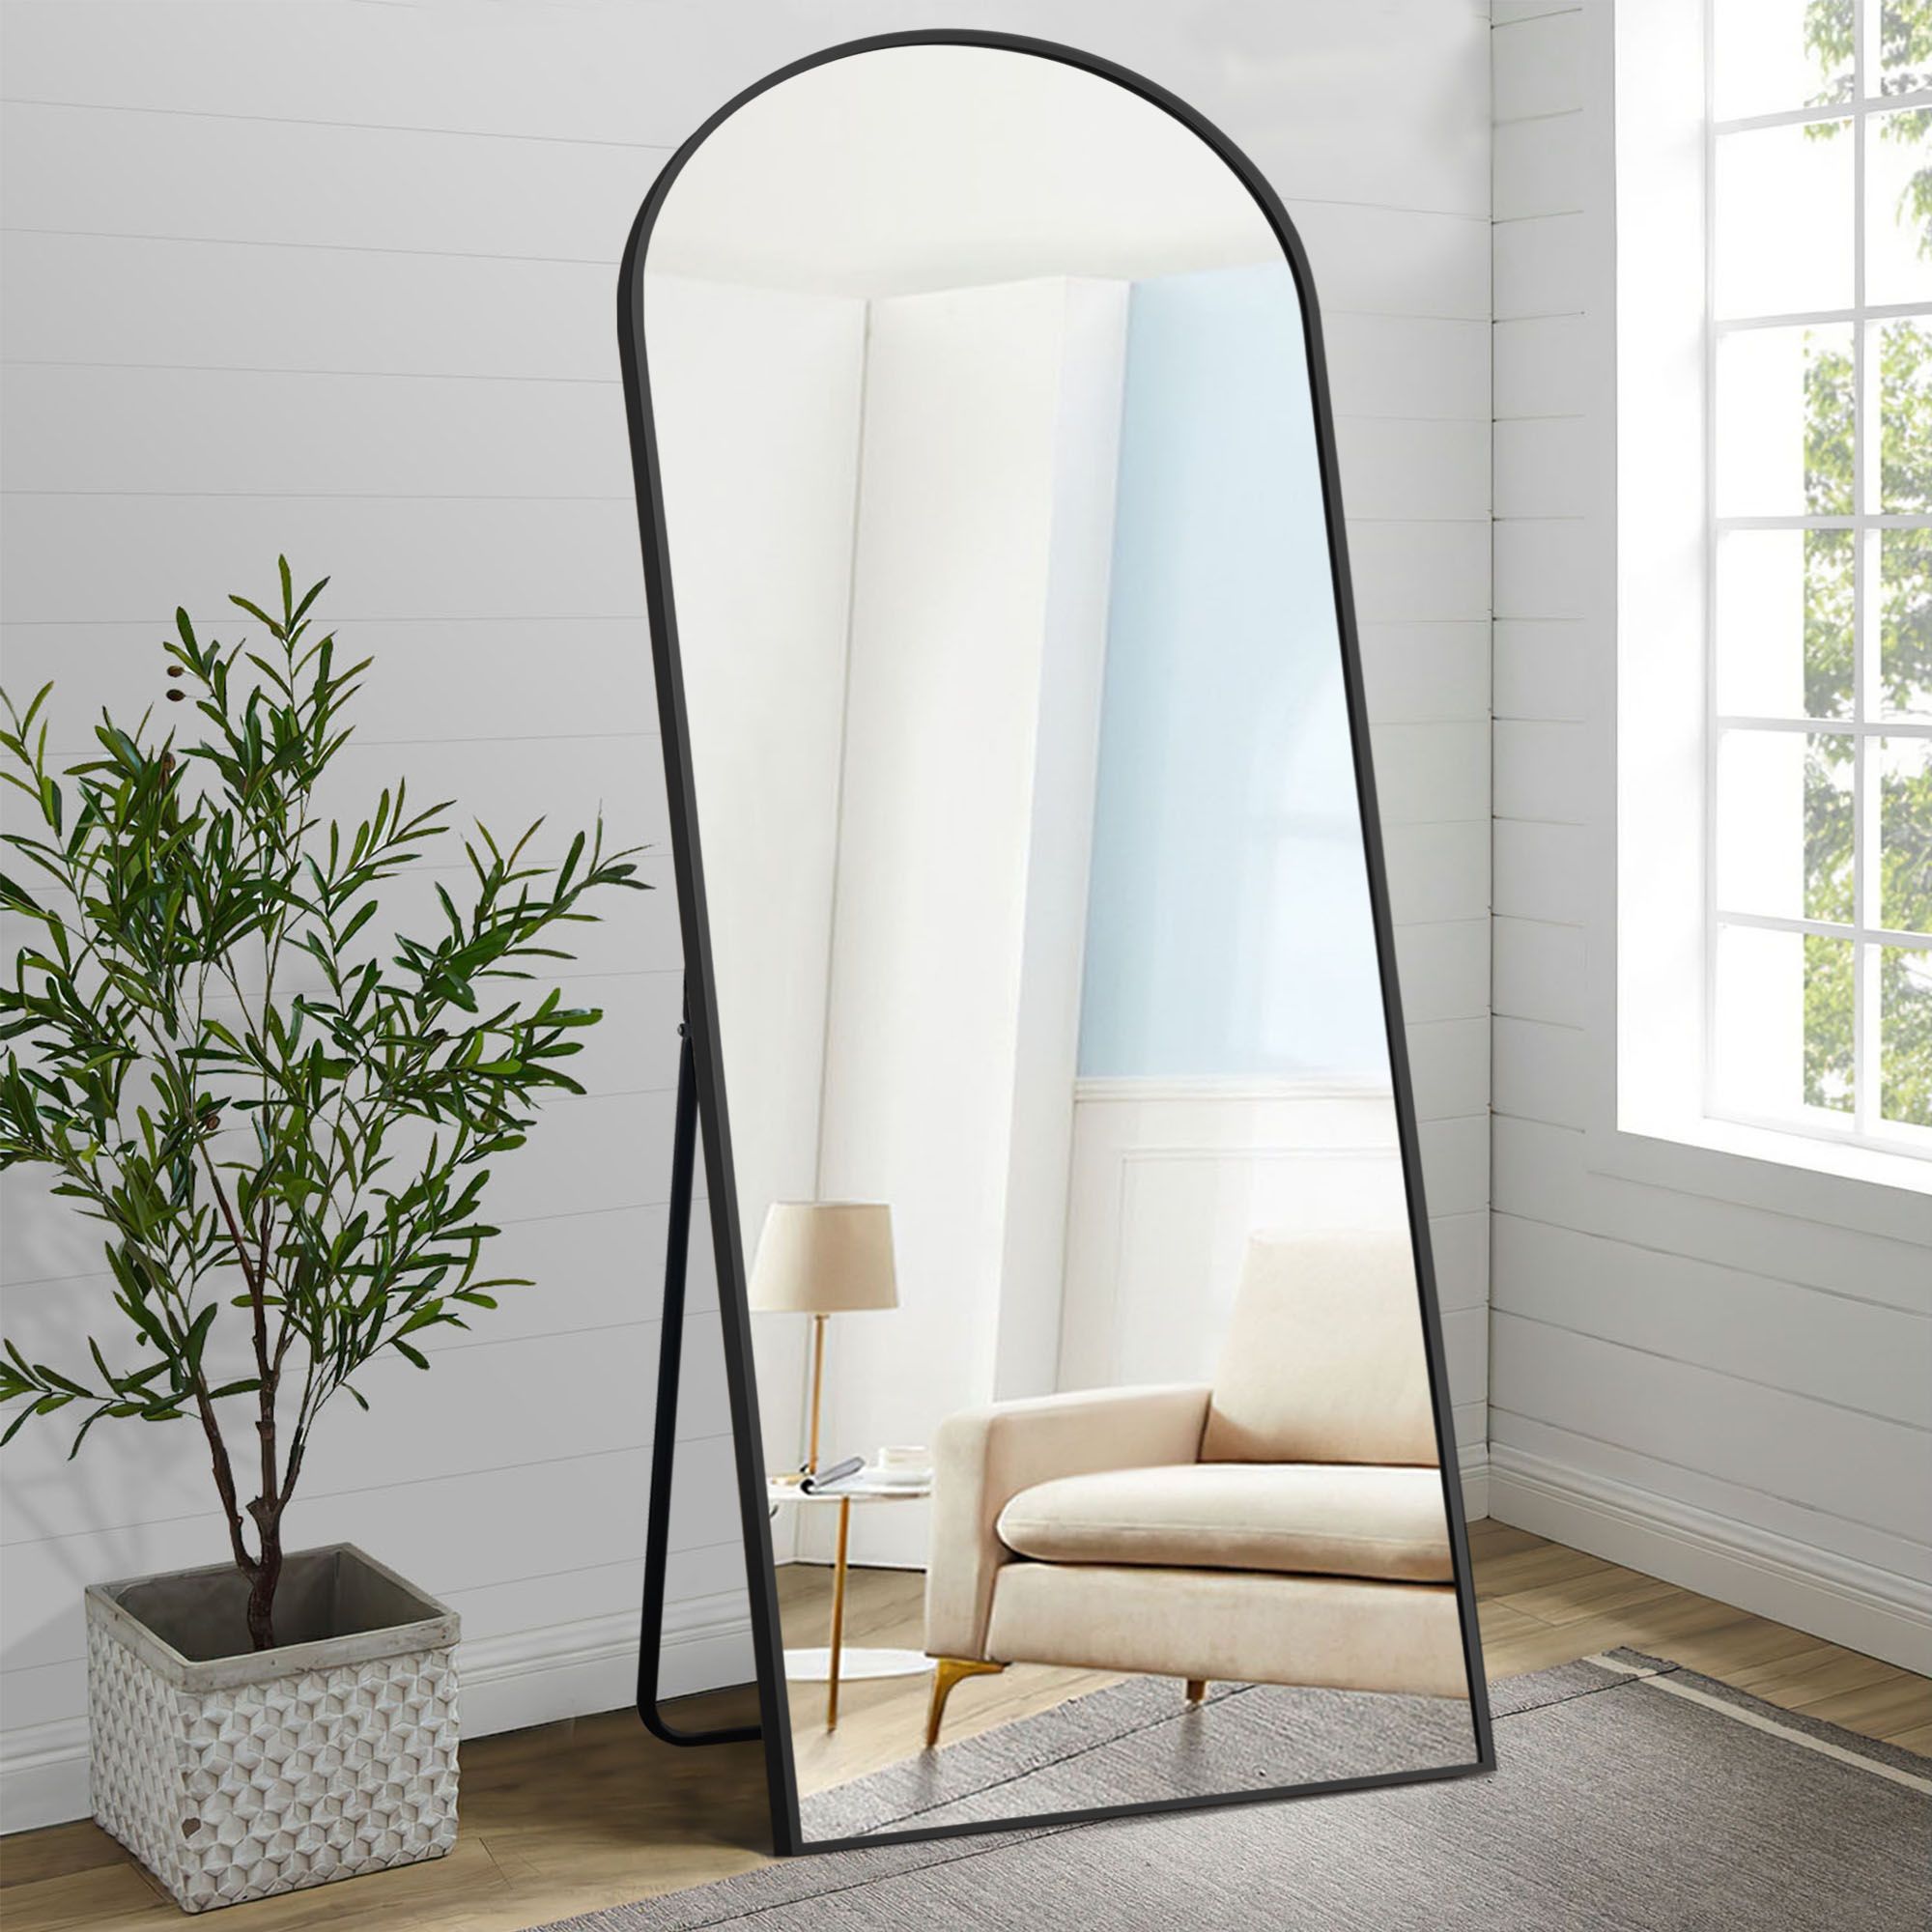 NeuType Aluminum Alloy Full-length Mirror Arch Decorative Mirror 71"x32",Black with Bracket | Walmart (US)